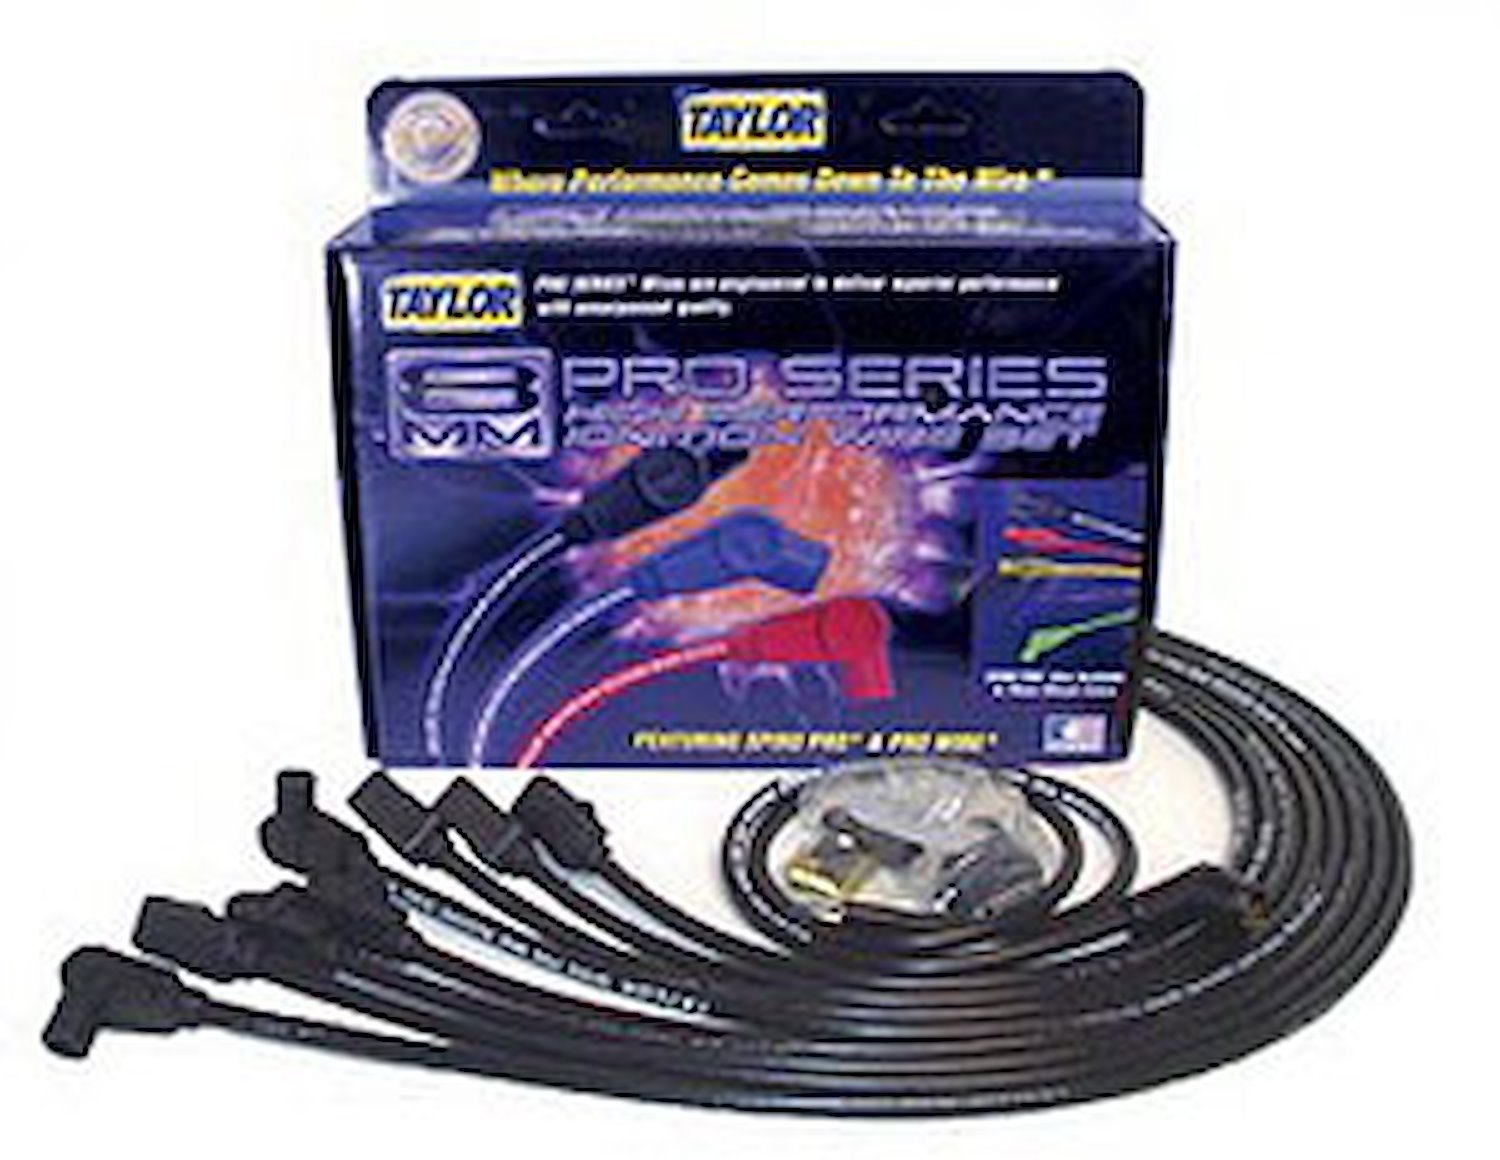 Spiro-Pro 8mm Spark Plug Wires Chevy Small Block (Under Headers)